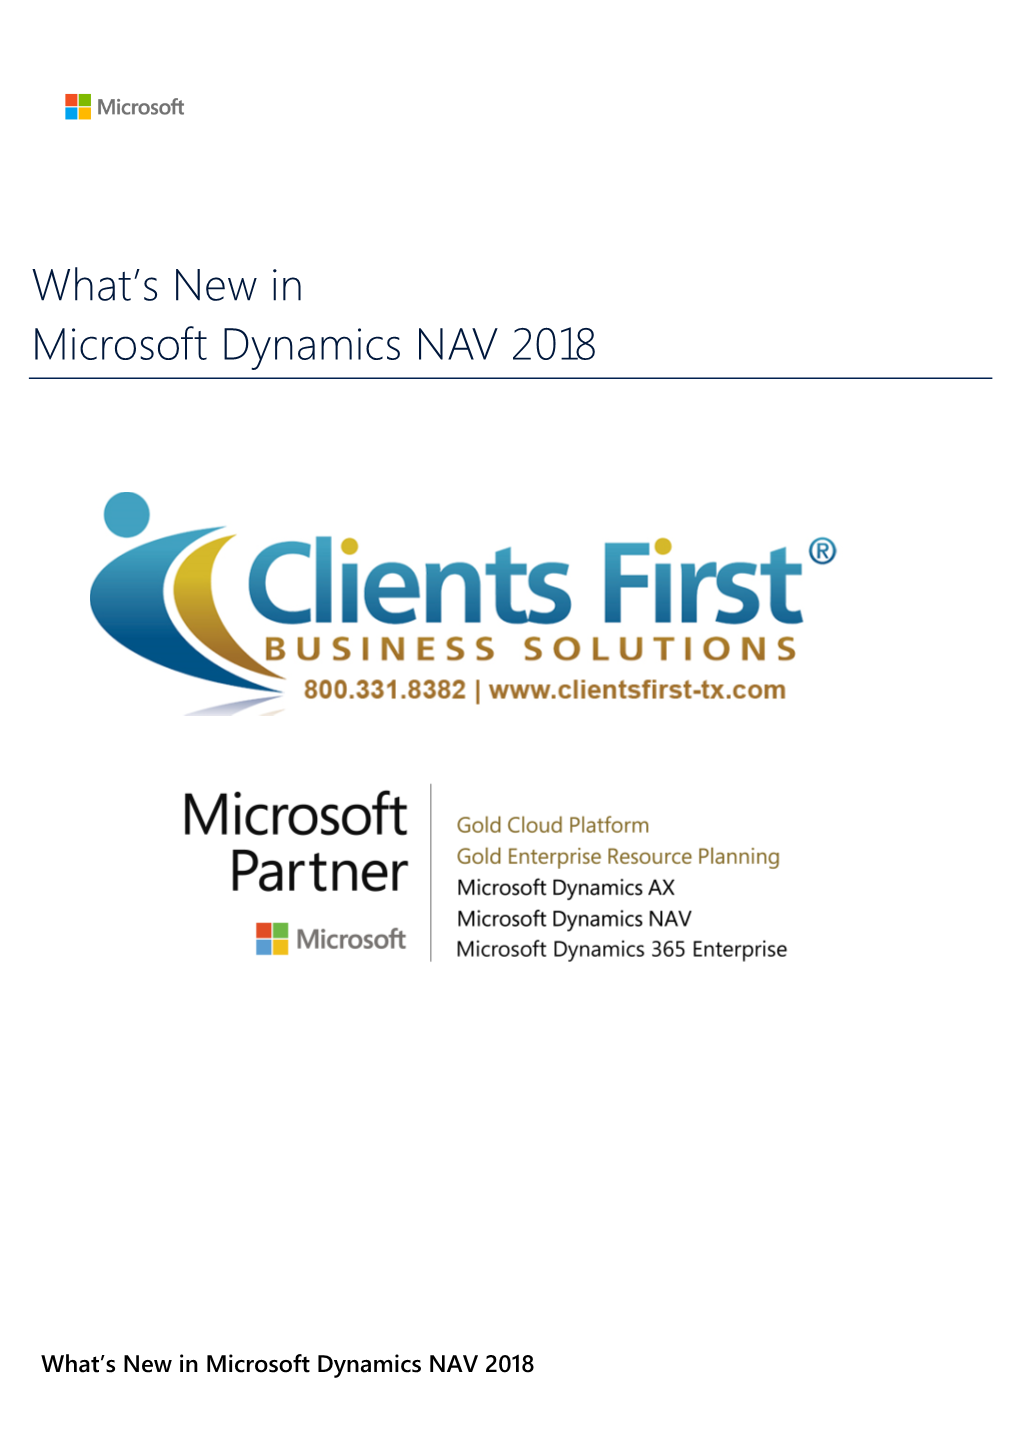 What's New in Microsoft Dynamics NAV 2018